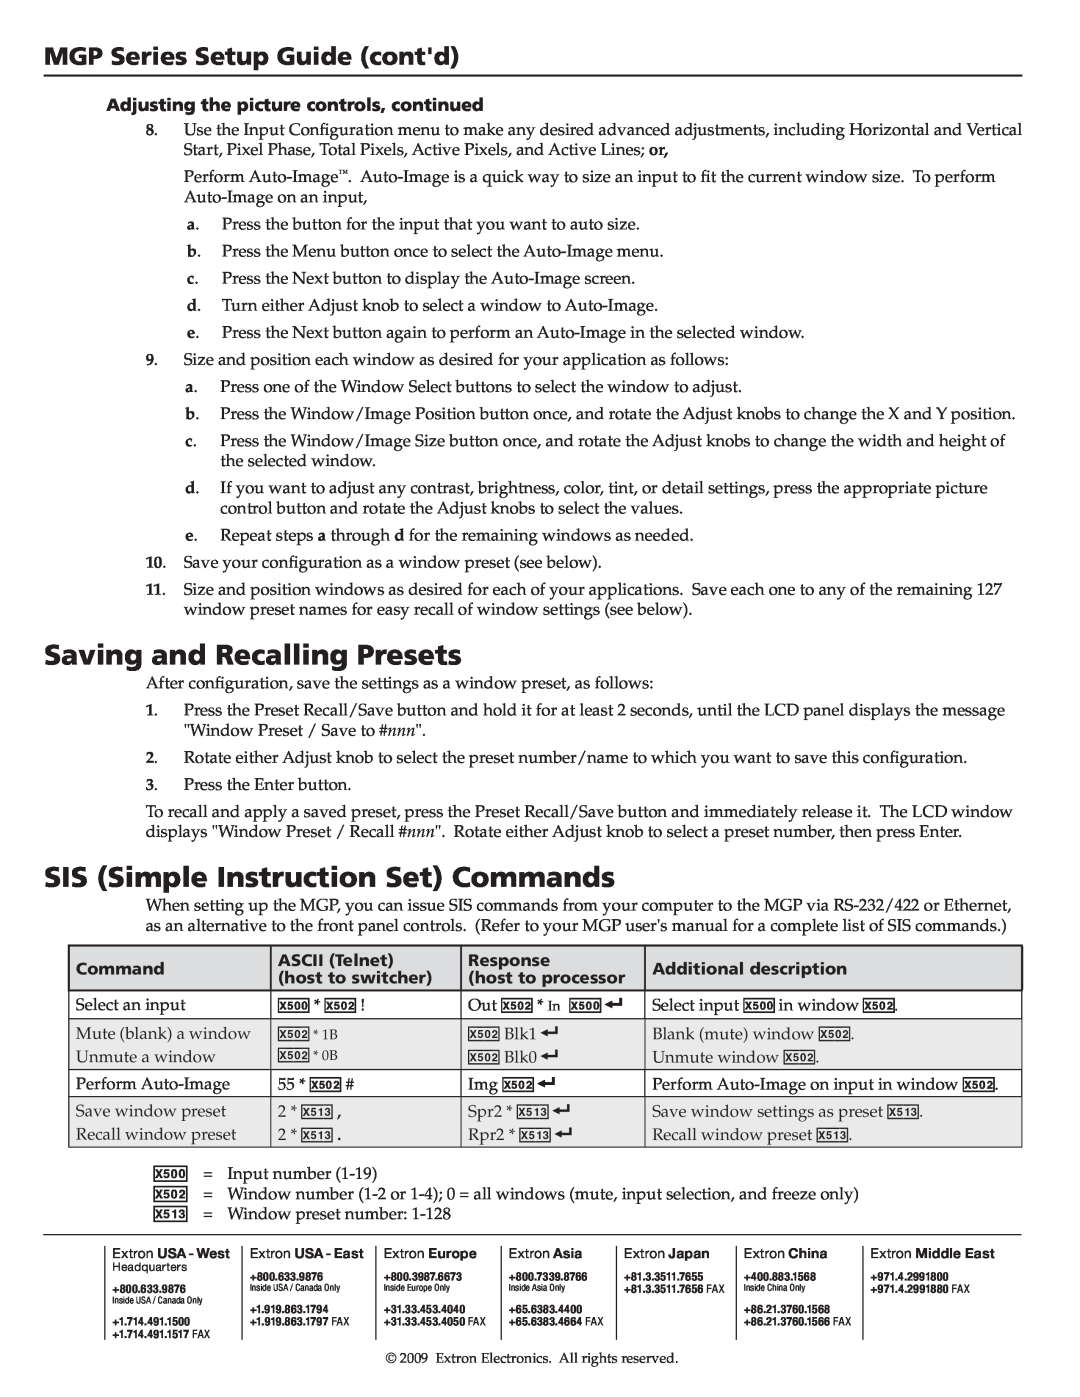 Extron electronic MGP 462XI DI Saving and Recalling Presets, SIS Simple Instruction Set Commands, Additional description 